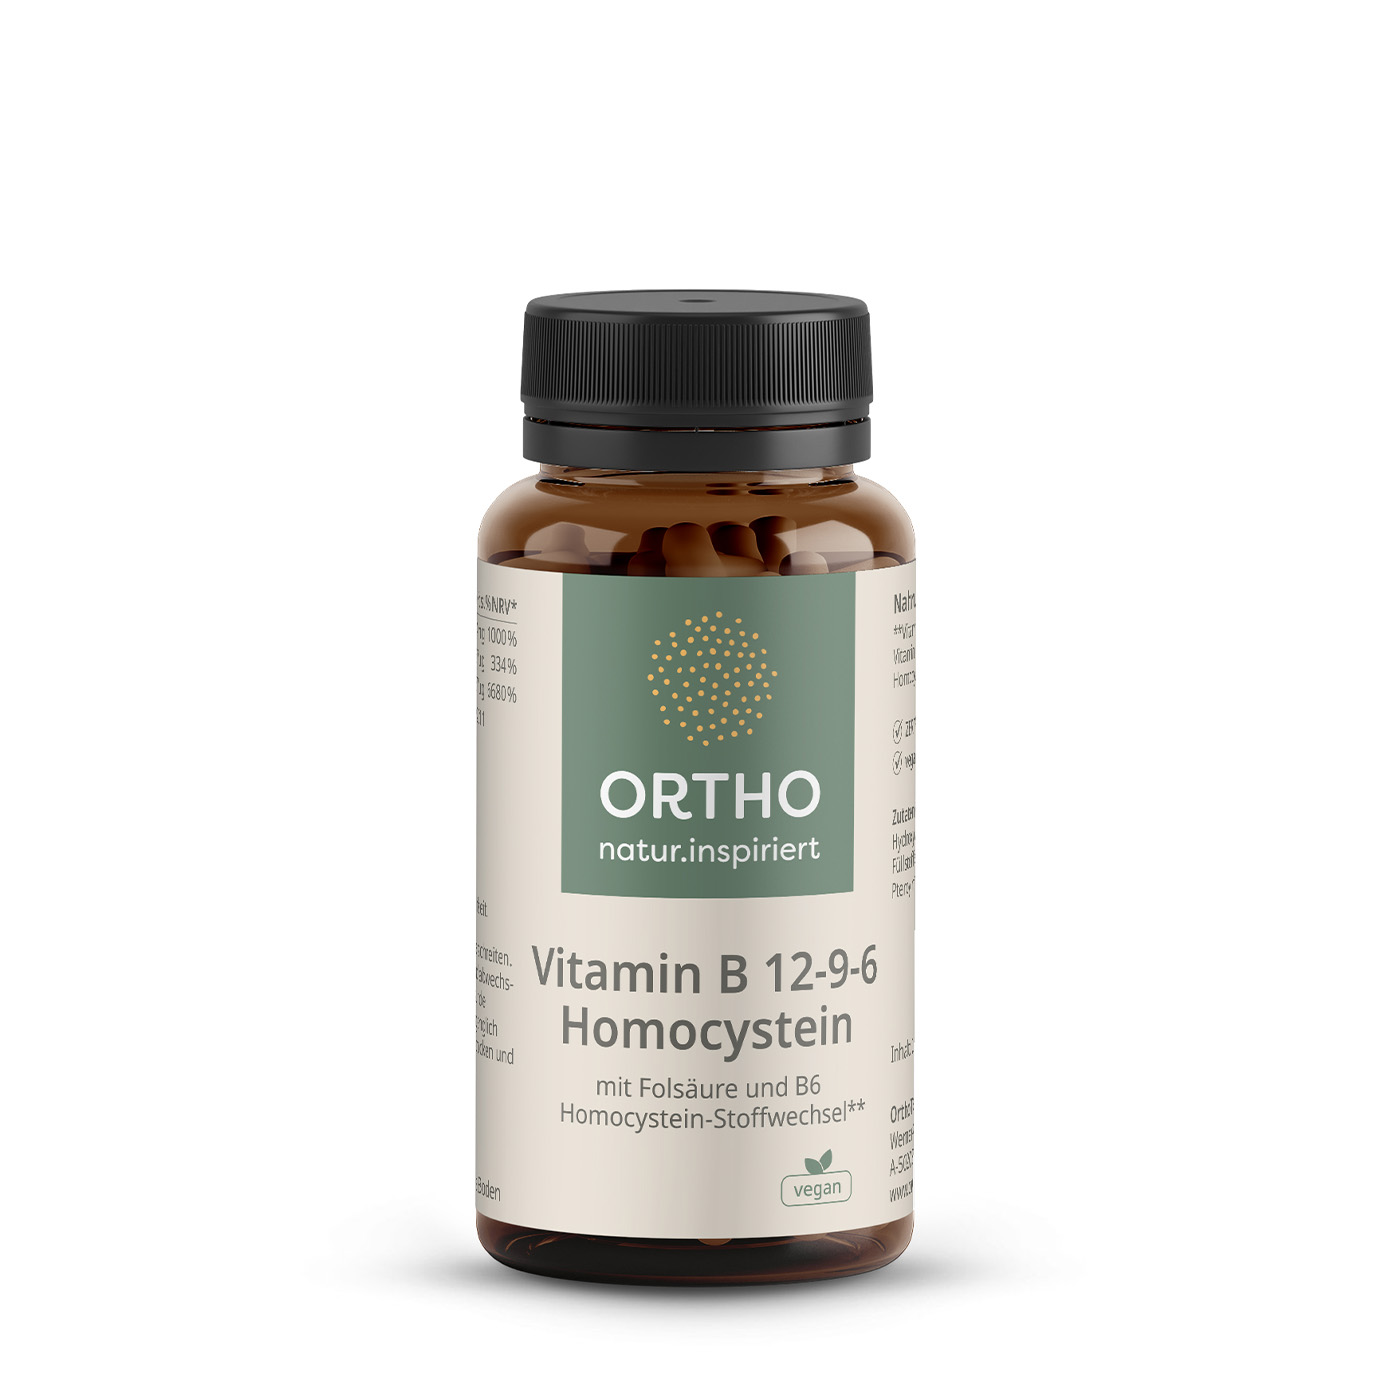 Vitamin B 12-9-6 Homocystein - 90 90 Kapseln Vitamin B12 Plus